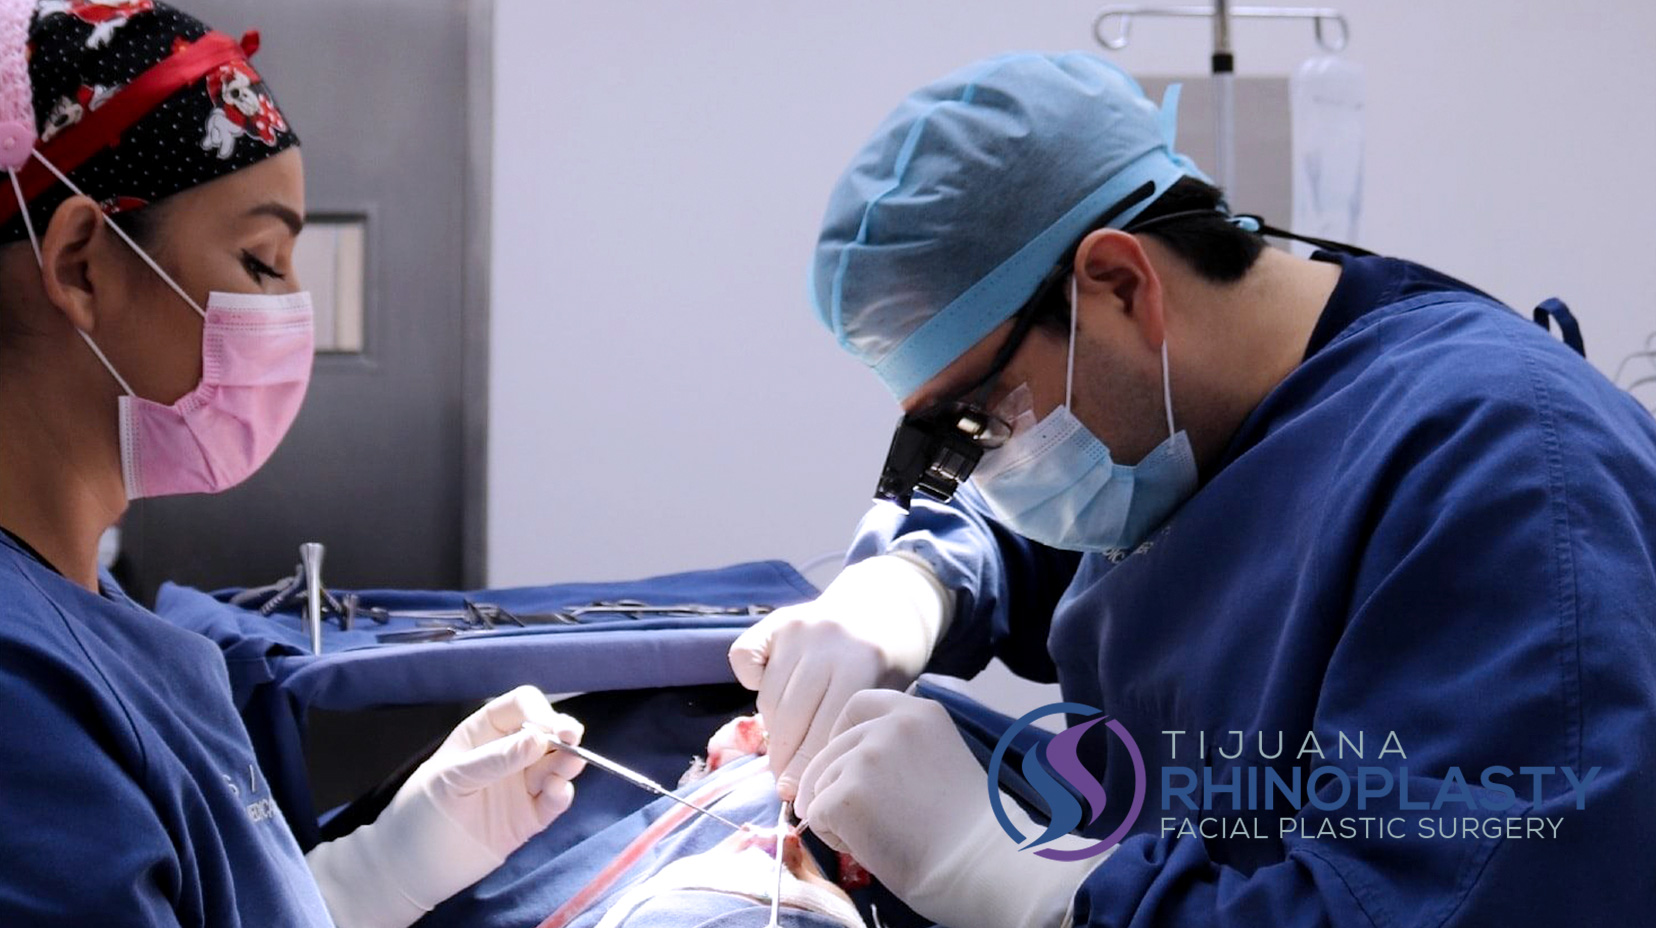 Tijuana Rhinoplasty offering world class facial plastic surgery, specializing in Rhinoplasty by Dr. Edgar Eduardo Santos.